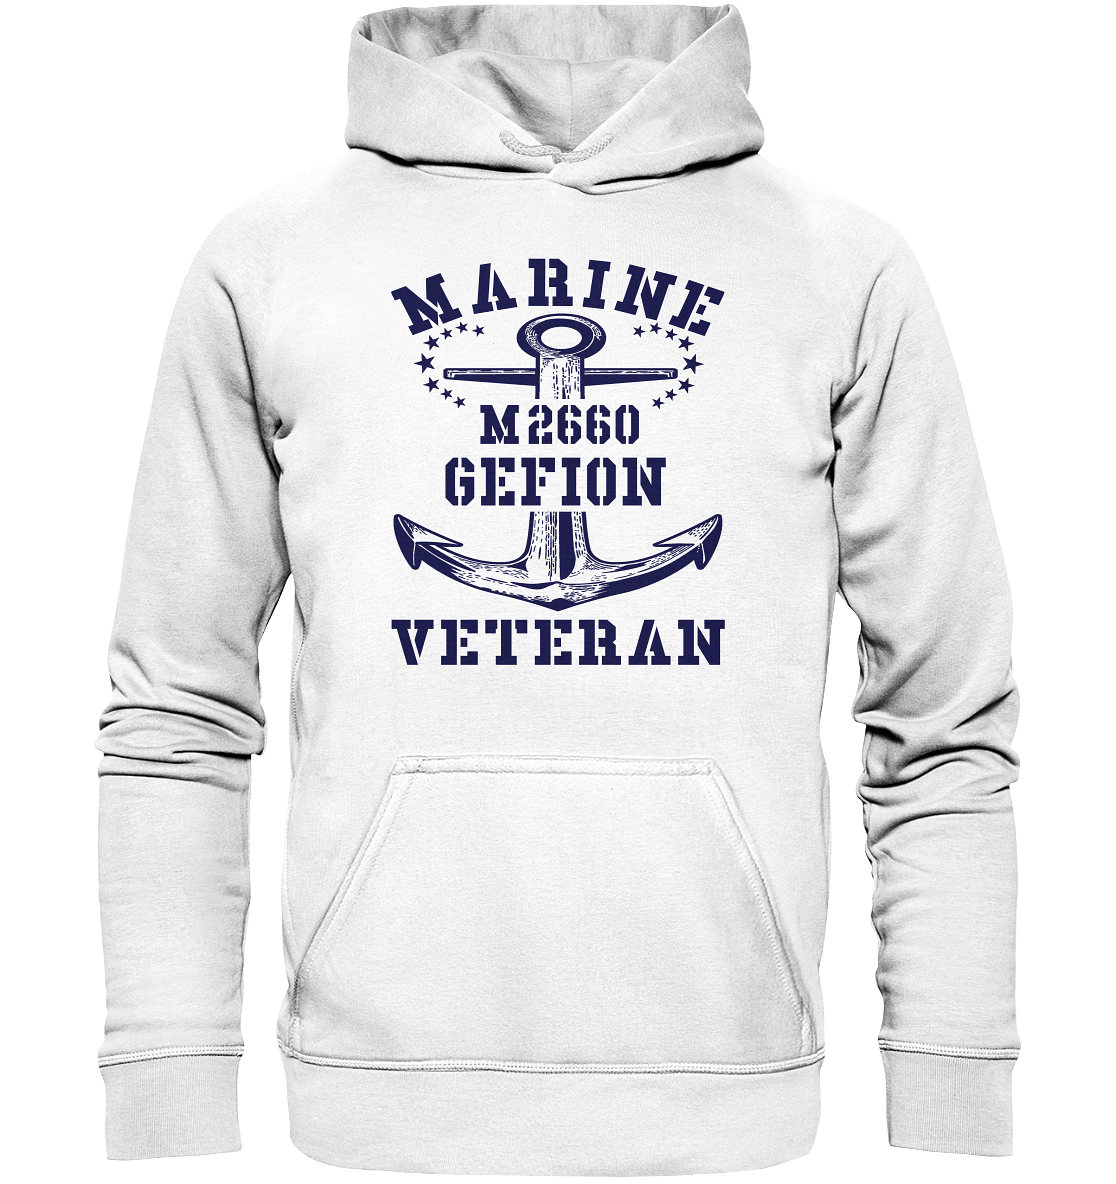 BiMi M2660 GEFION Marine Veteran  - Basic Unisex Hoodie